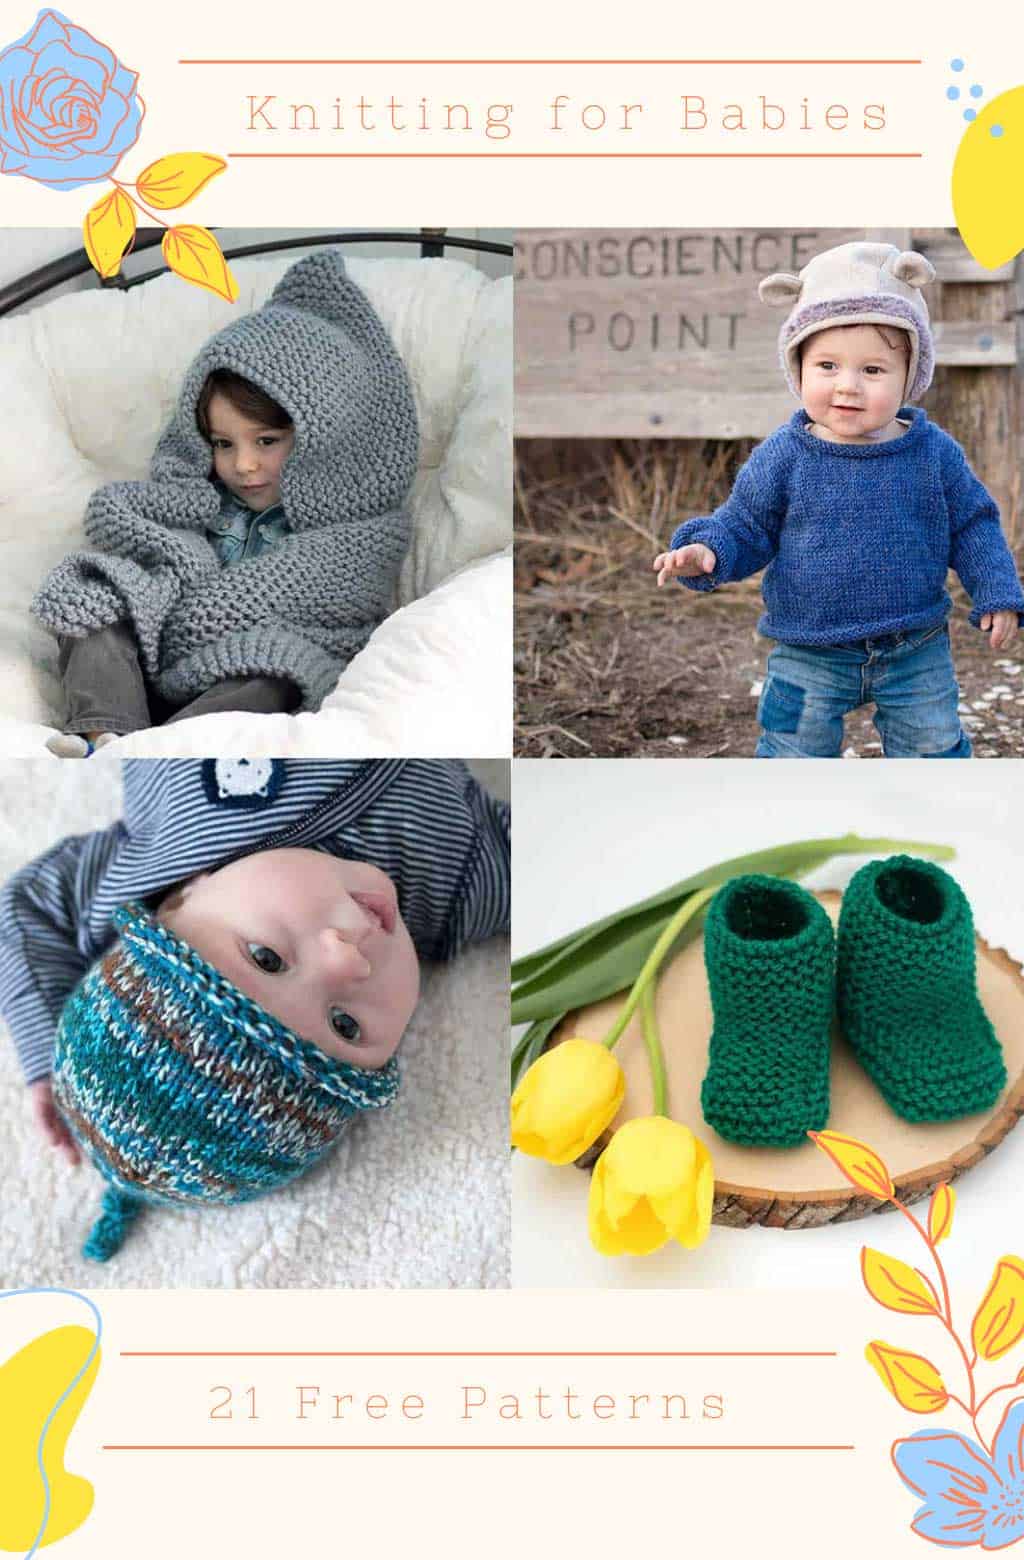 21 Free Knitting Patterns for Babies